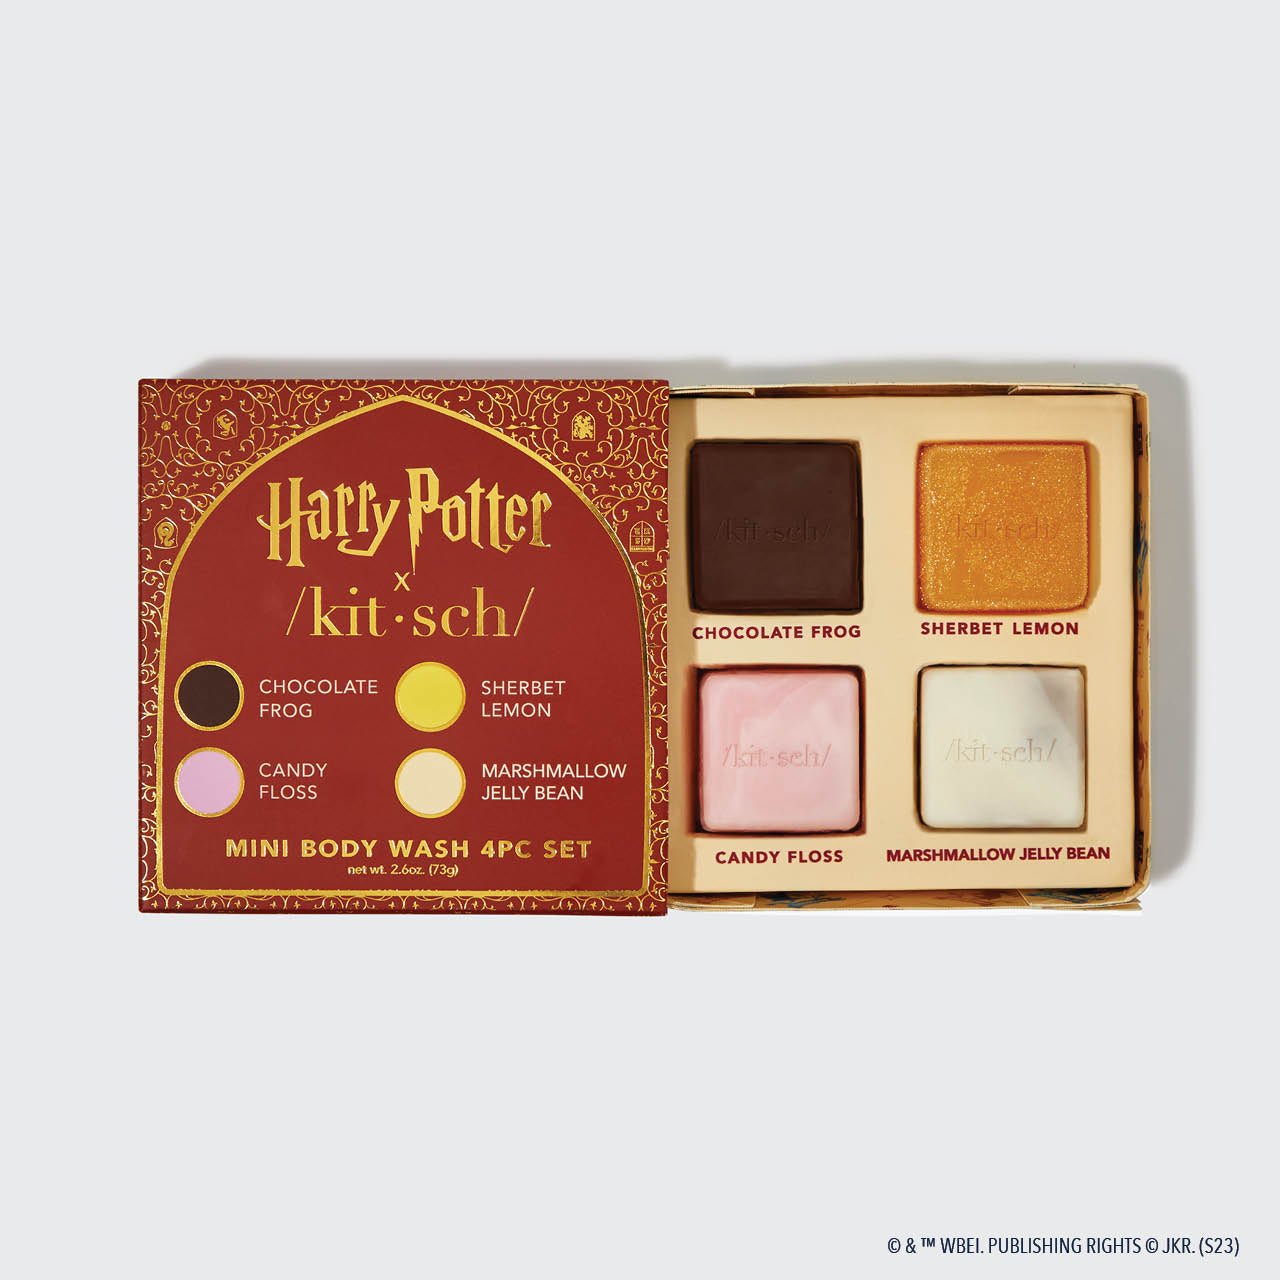 Harry Potter x Kitsch kroppstvål 4 delar i provset